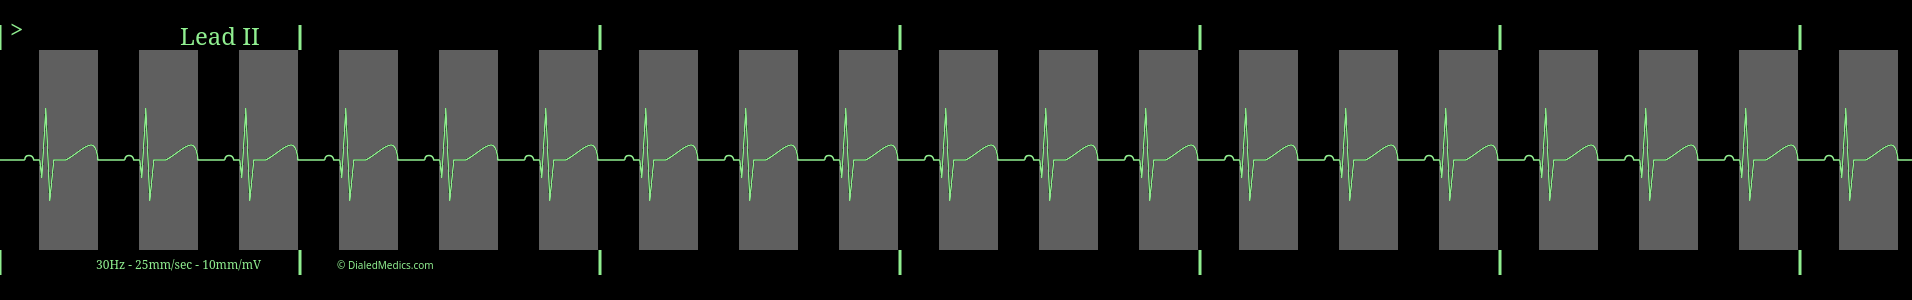 EKG tracing of regular sinus rhythm with highlighted Q-T Intervals.